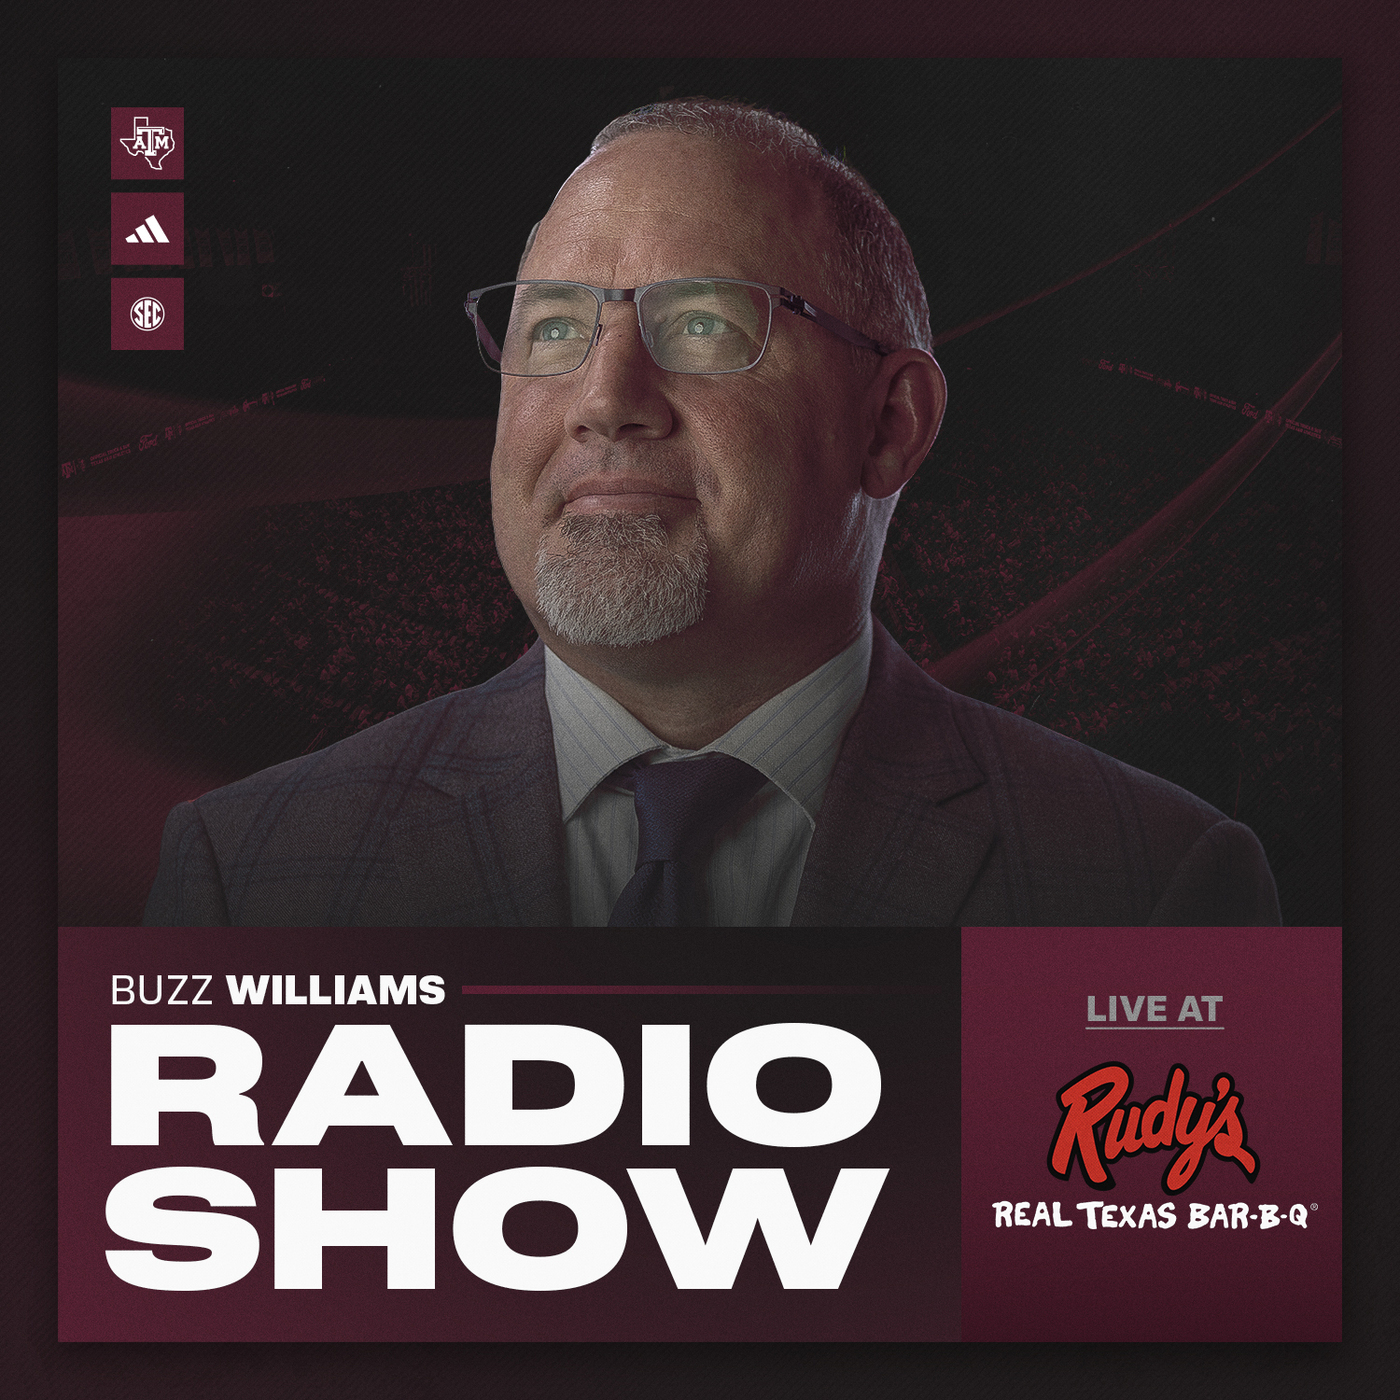 The Buzz Williams Radio Show